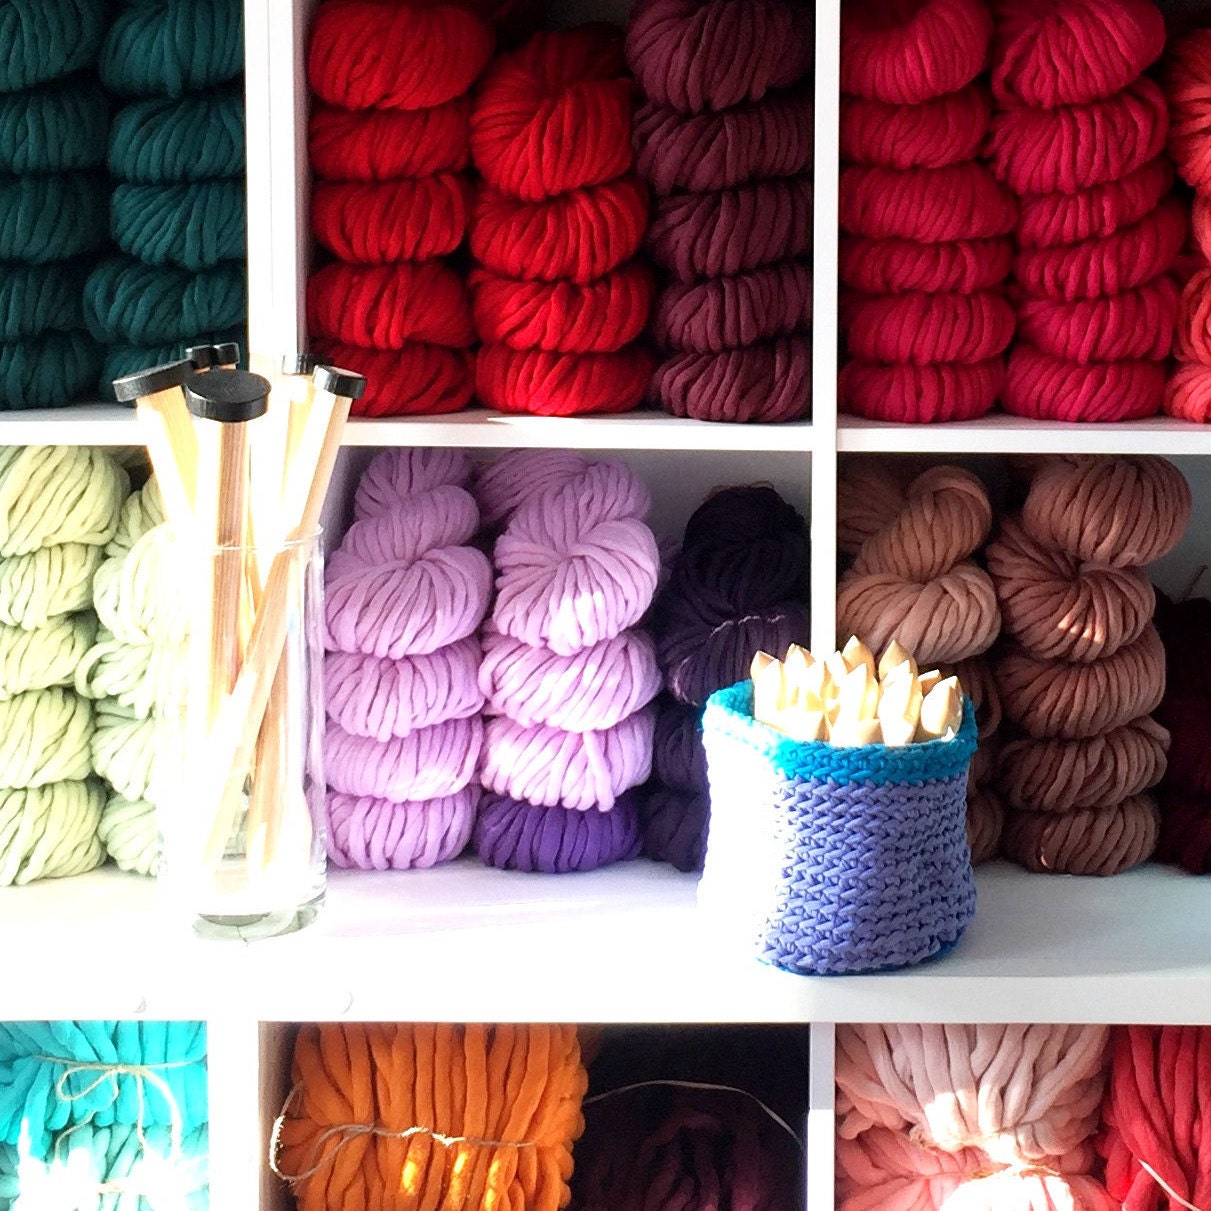 Chunky Merino Wool Yarn Super Bulky Fuchsia Yarn Thick Knitting Roving Yarn  